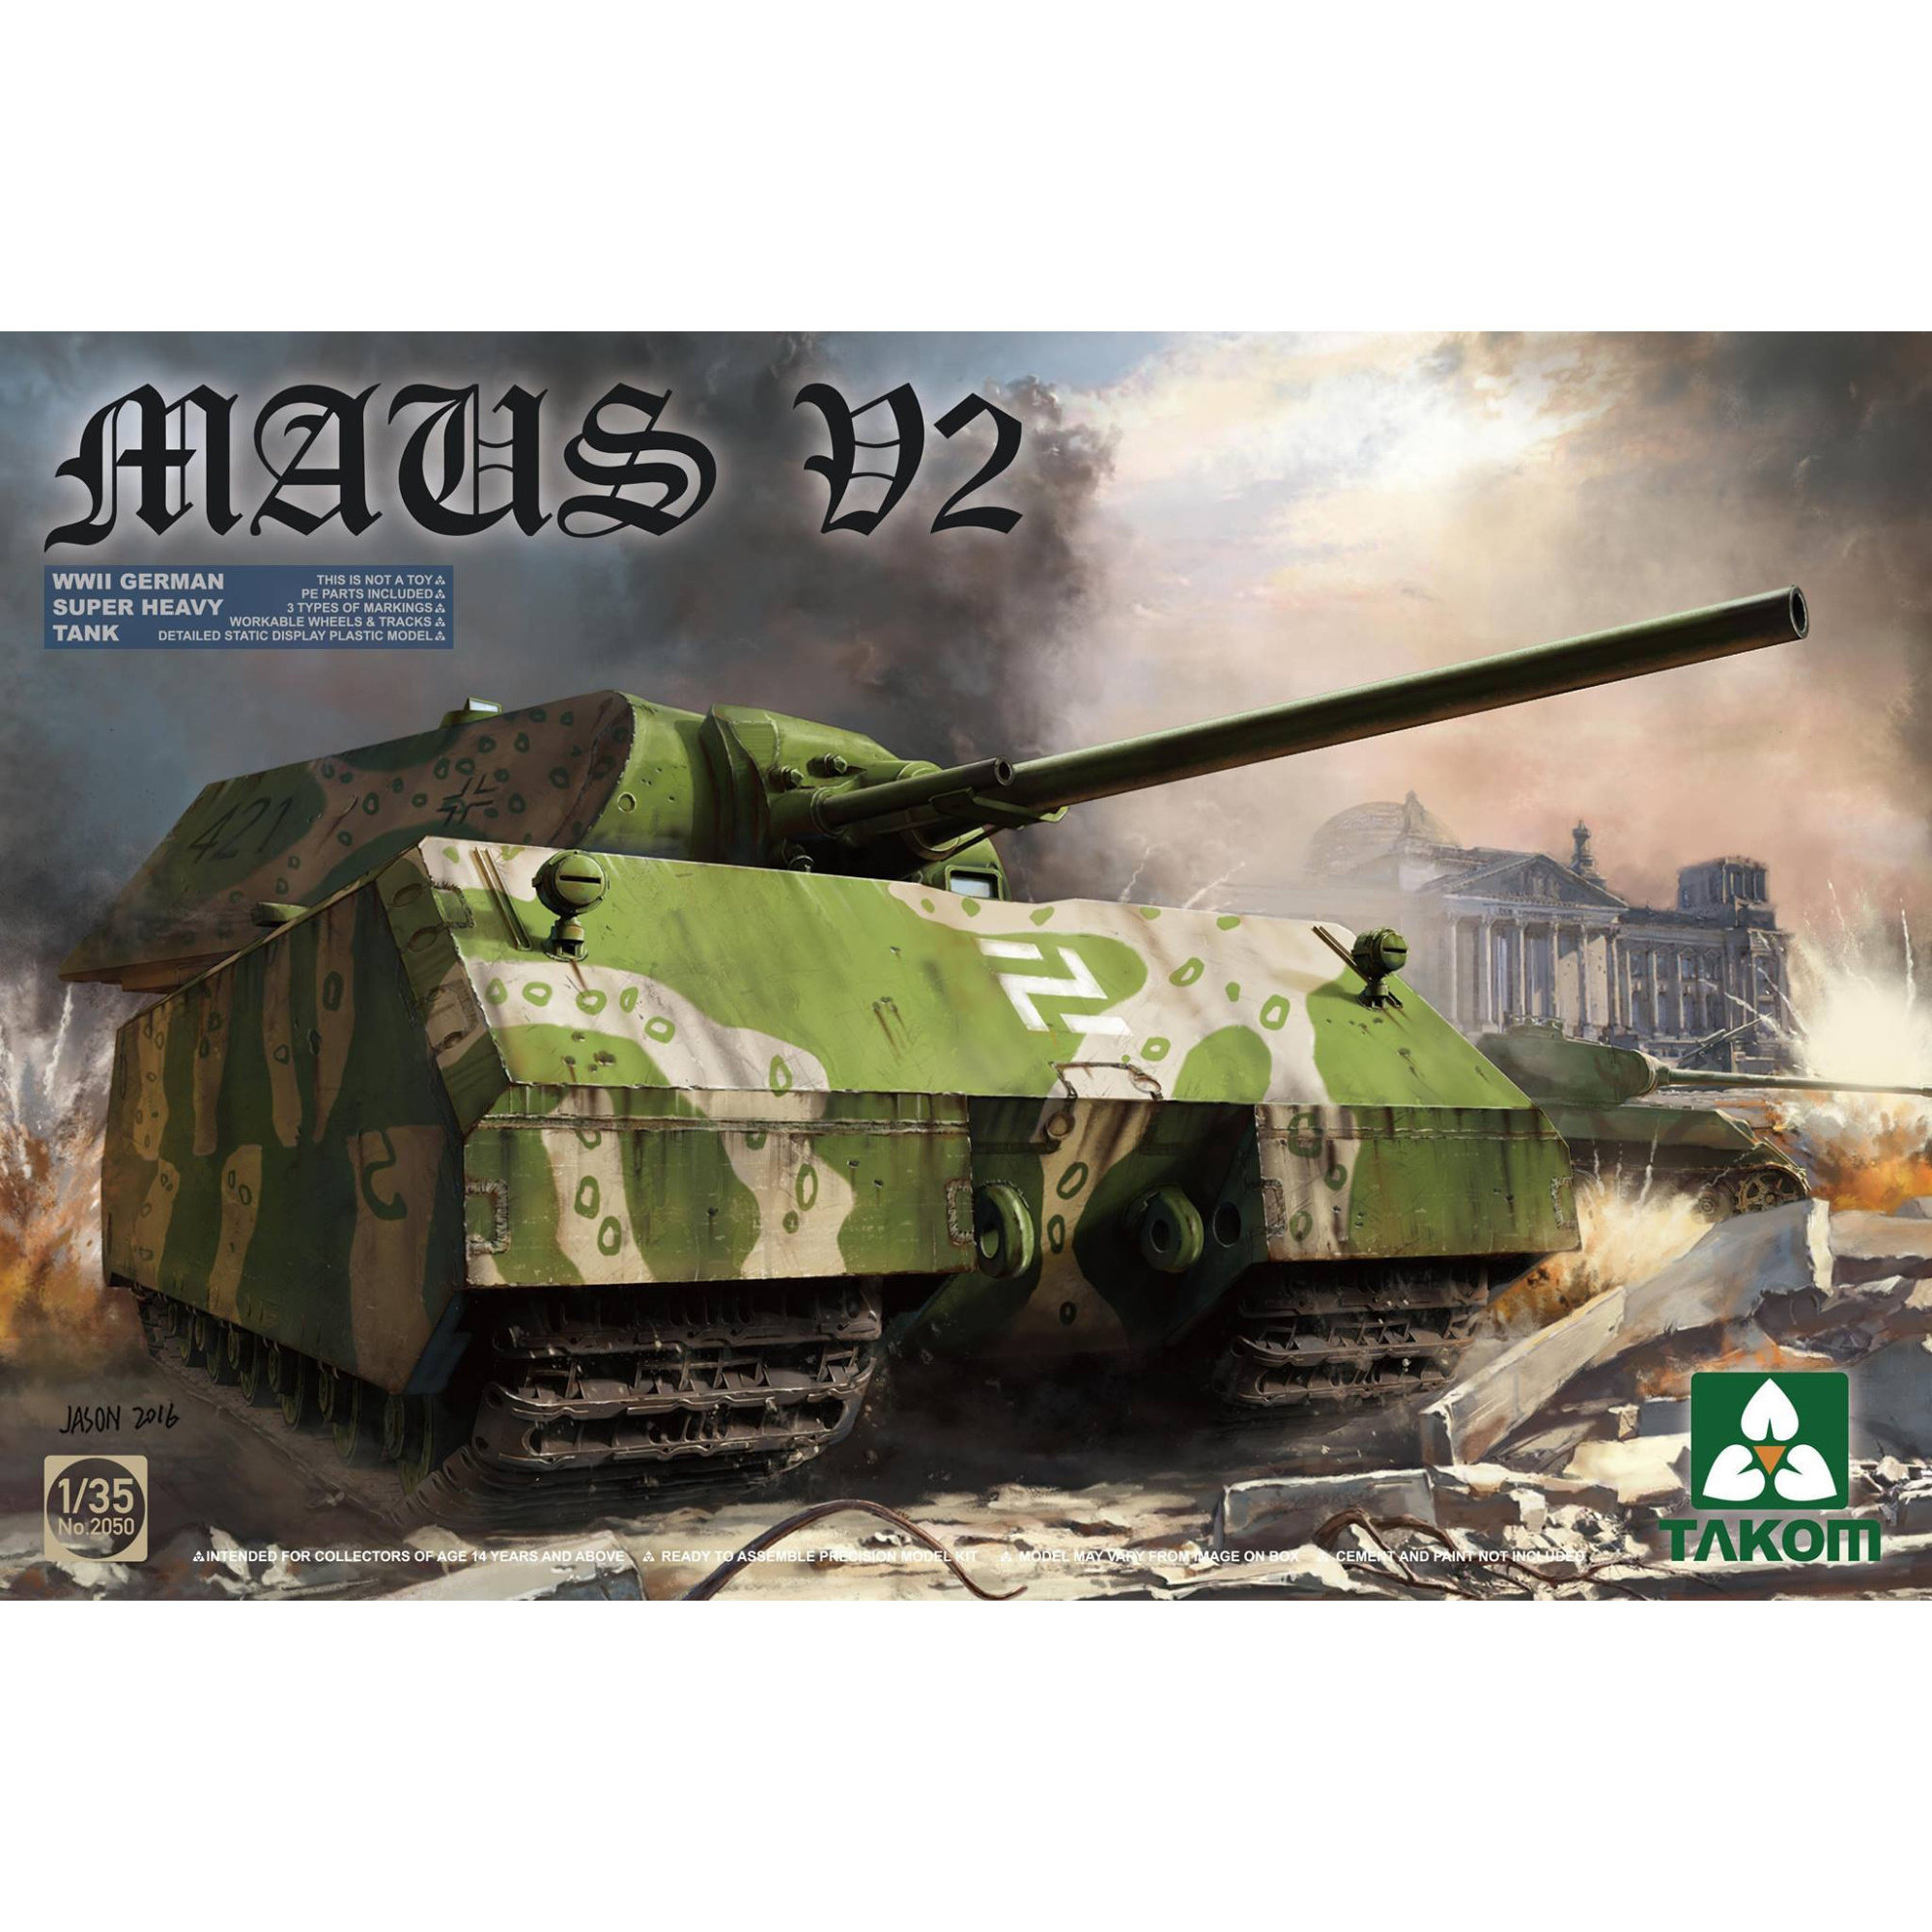 2050 Takom 1/35 WWII German Super Heavy Tank Maus V2